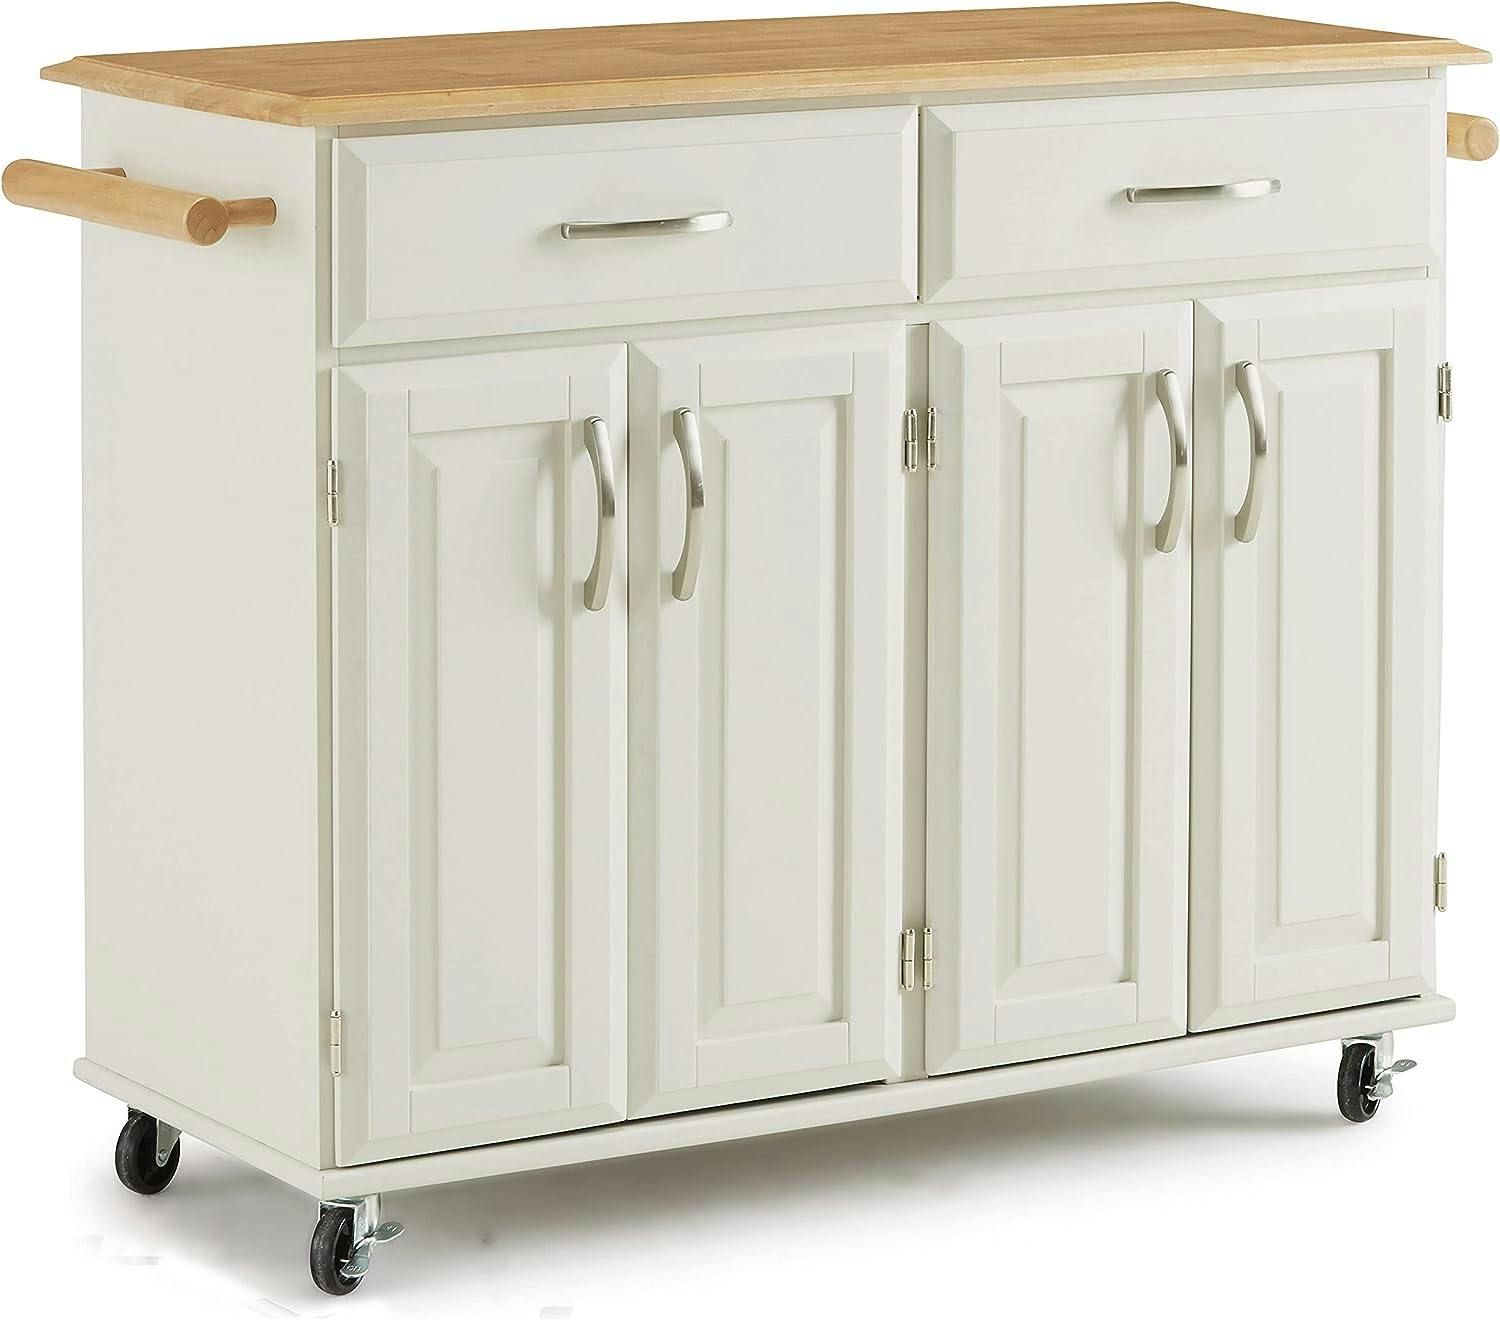 Maple and White Rectangular Kitchen Cart with Storage